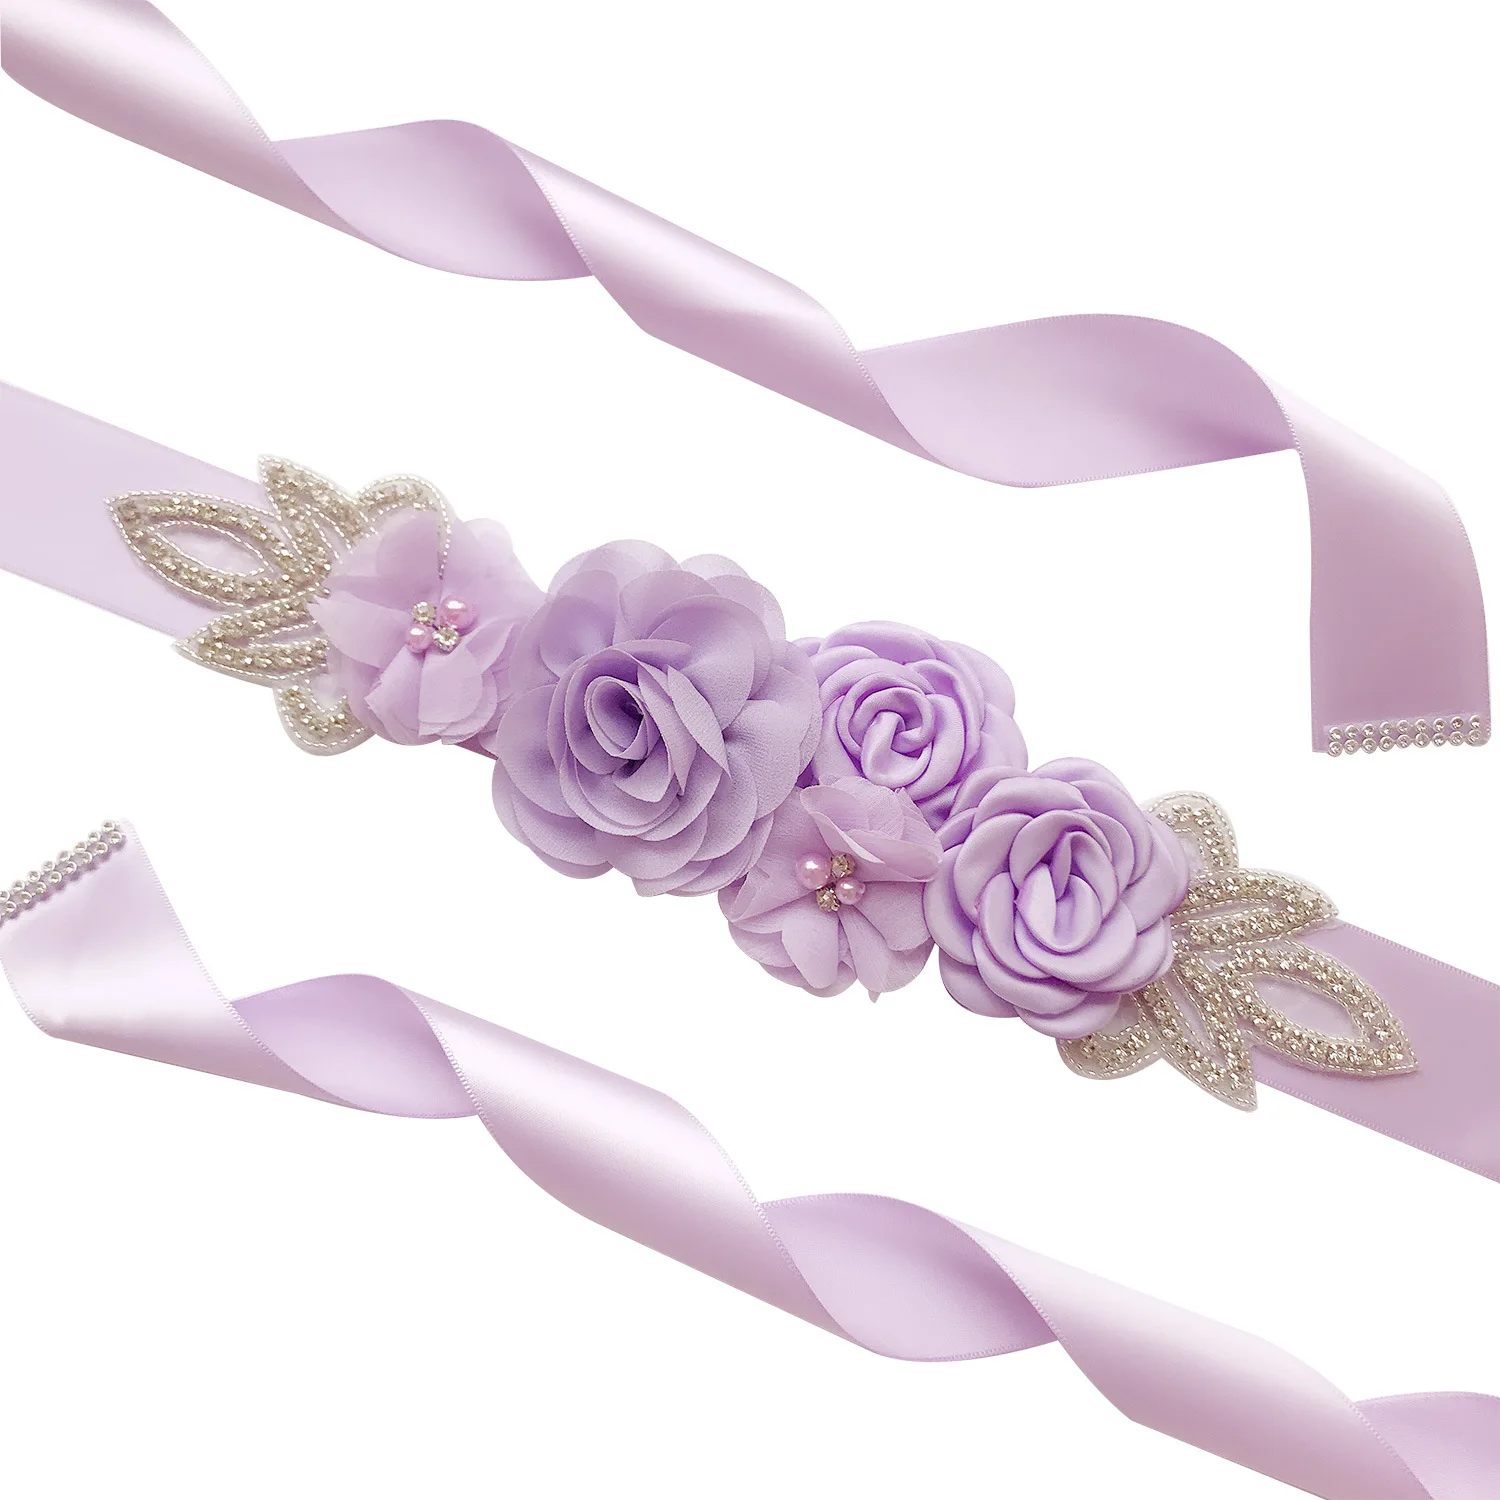 TraveT Maternity Flower Sash Belt Headband Set for Women Girls Faux Pearl Crystal Rhinestone Wedding Baby Shower Sash,Light Purple